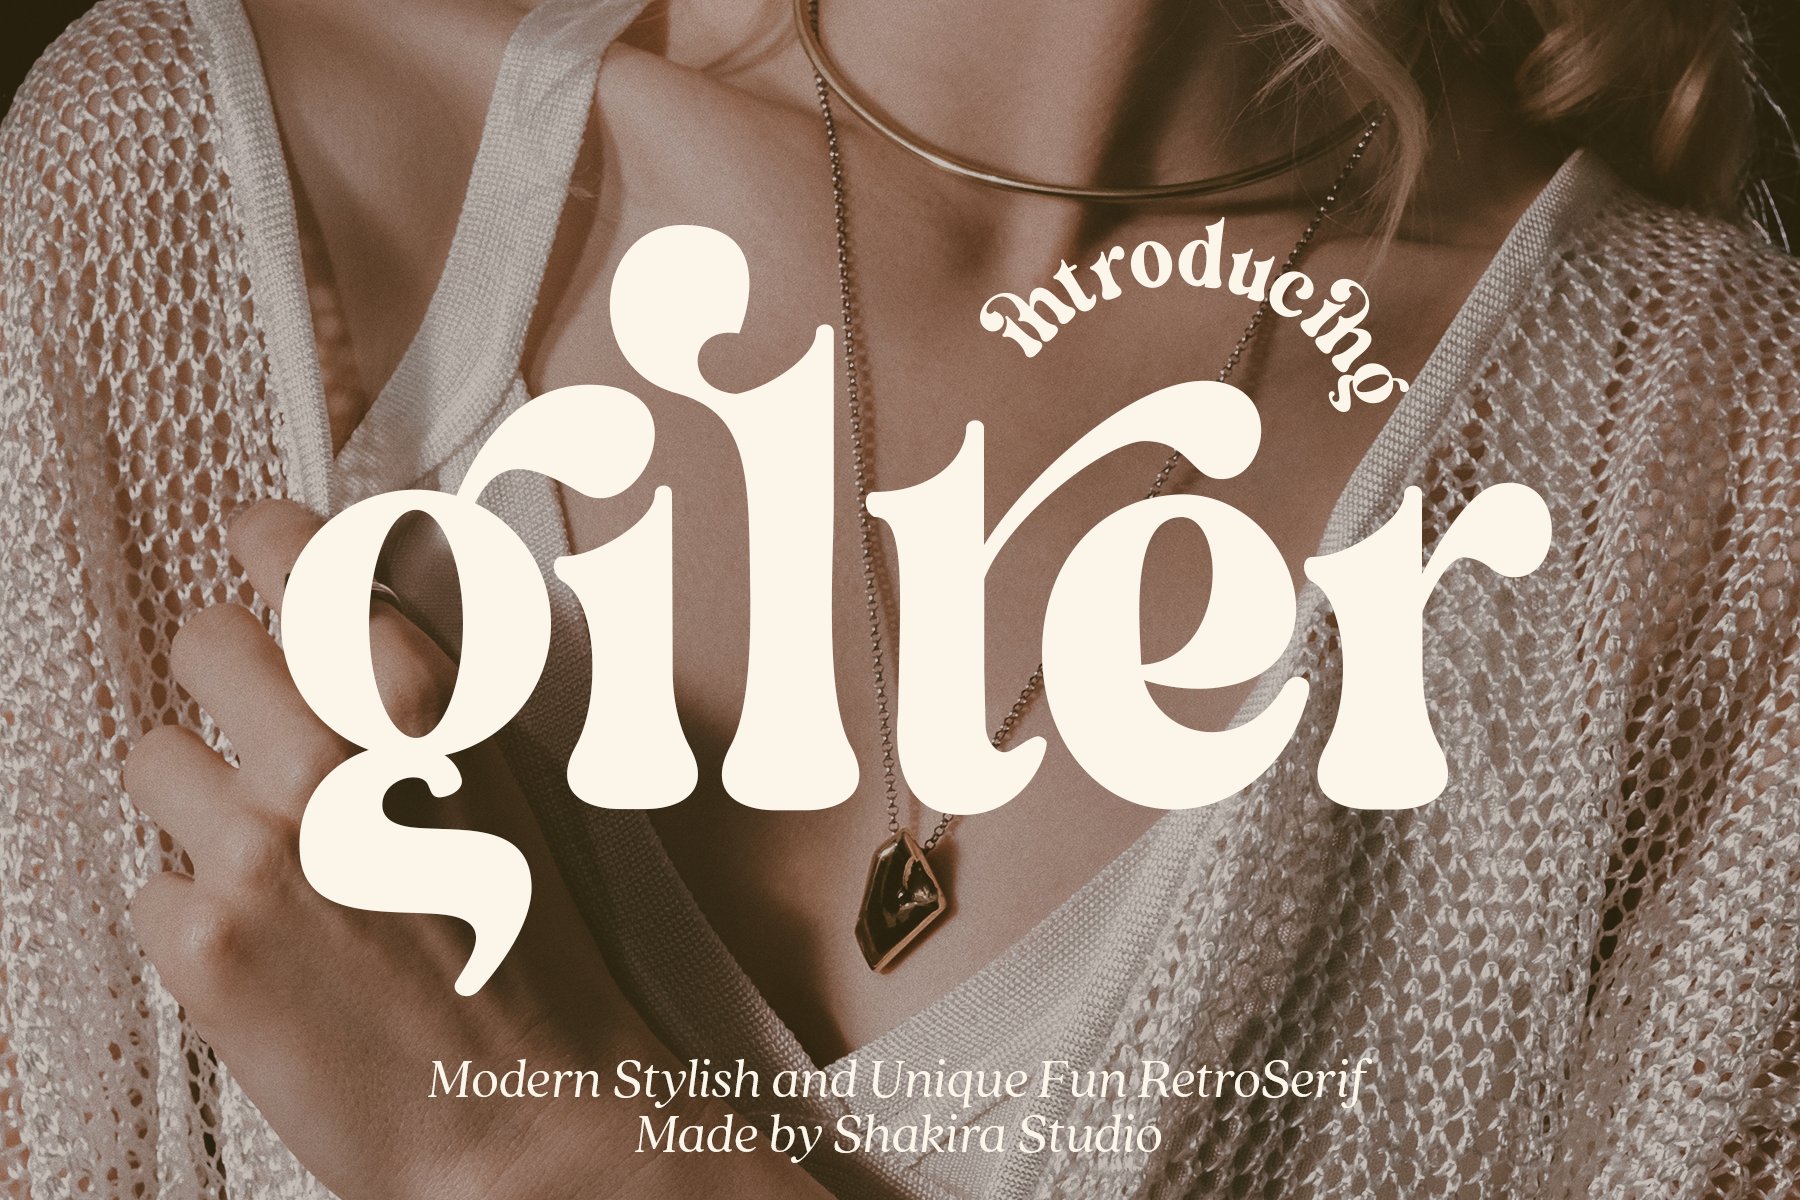 Gilter - Retro Serif Font cover image.